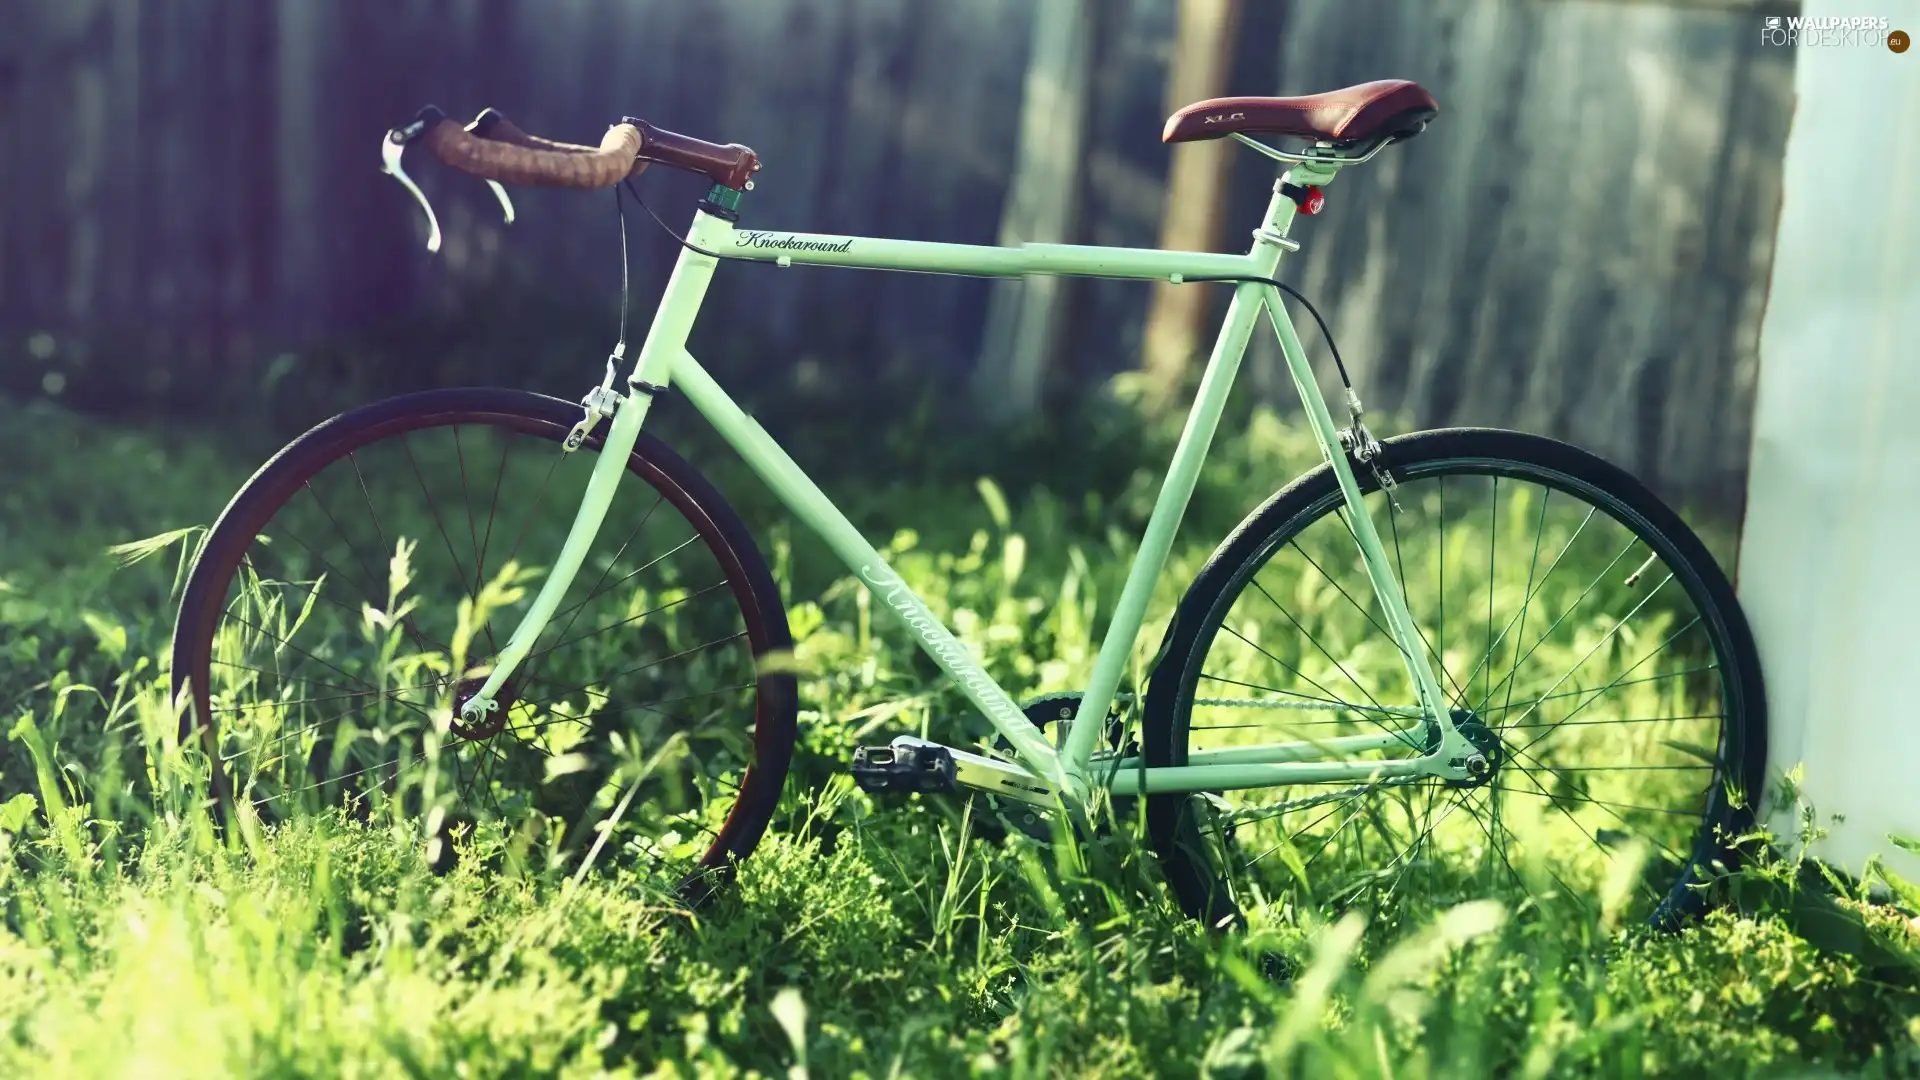 Bike, grass